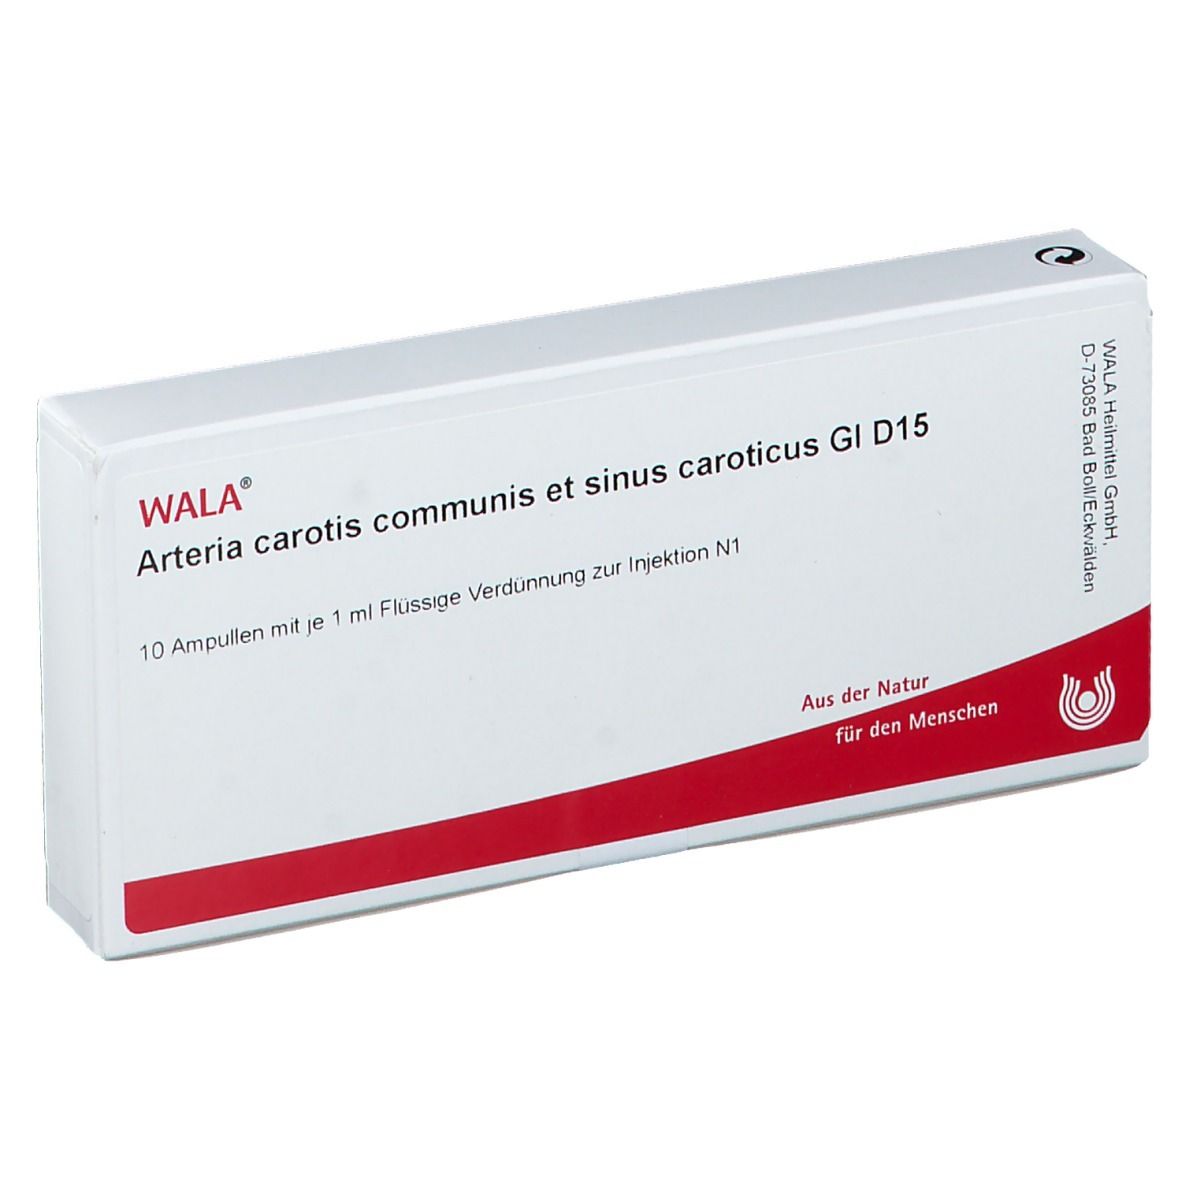 WALA® Arteria carotis communis et sinus caroticus Gl D 15